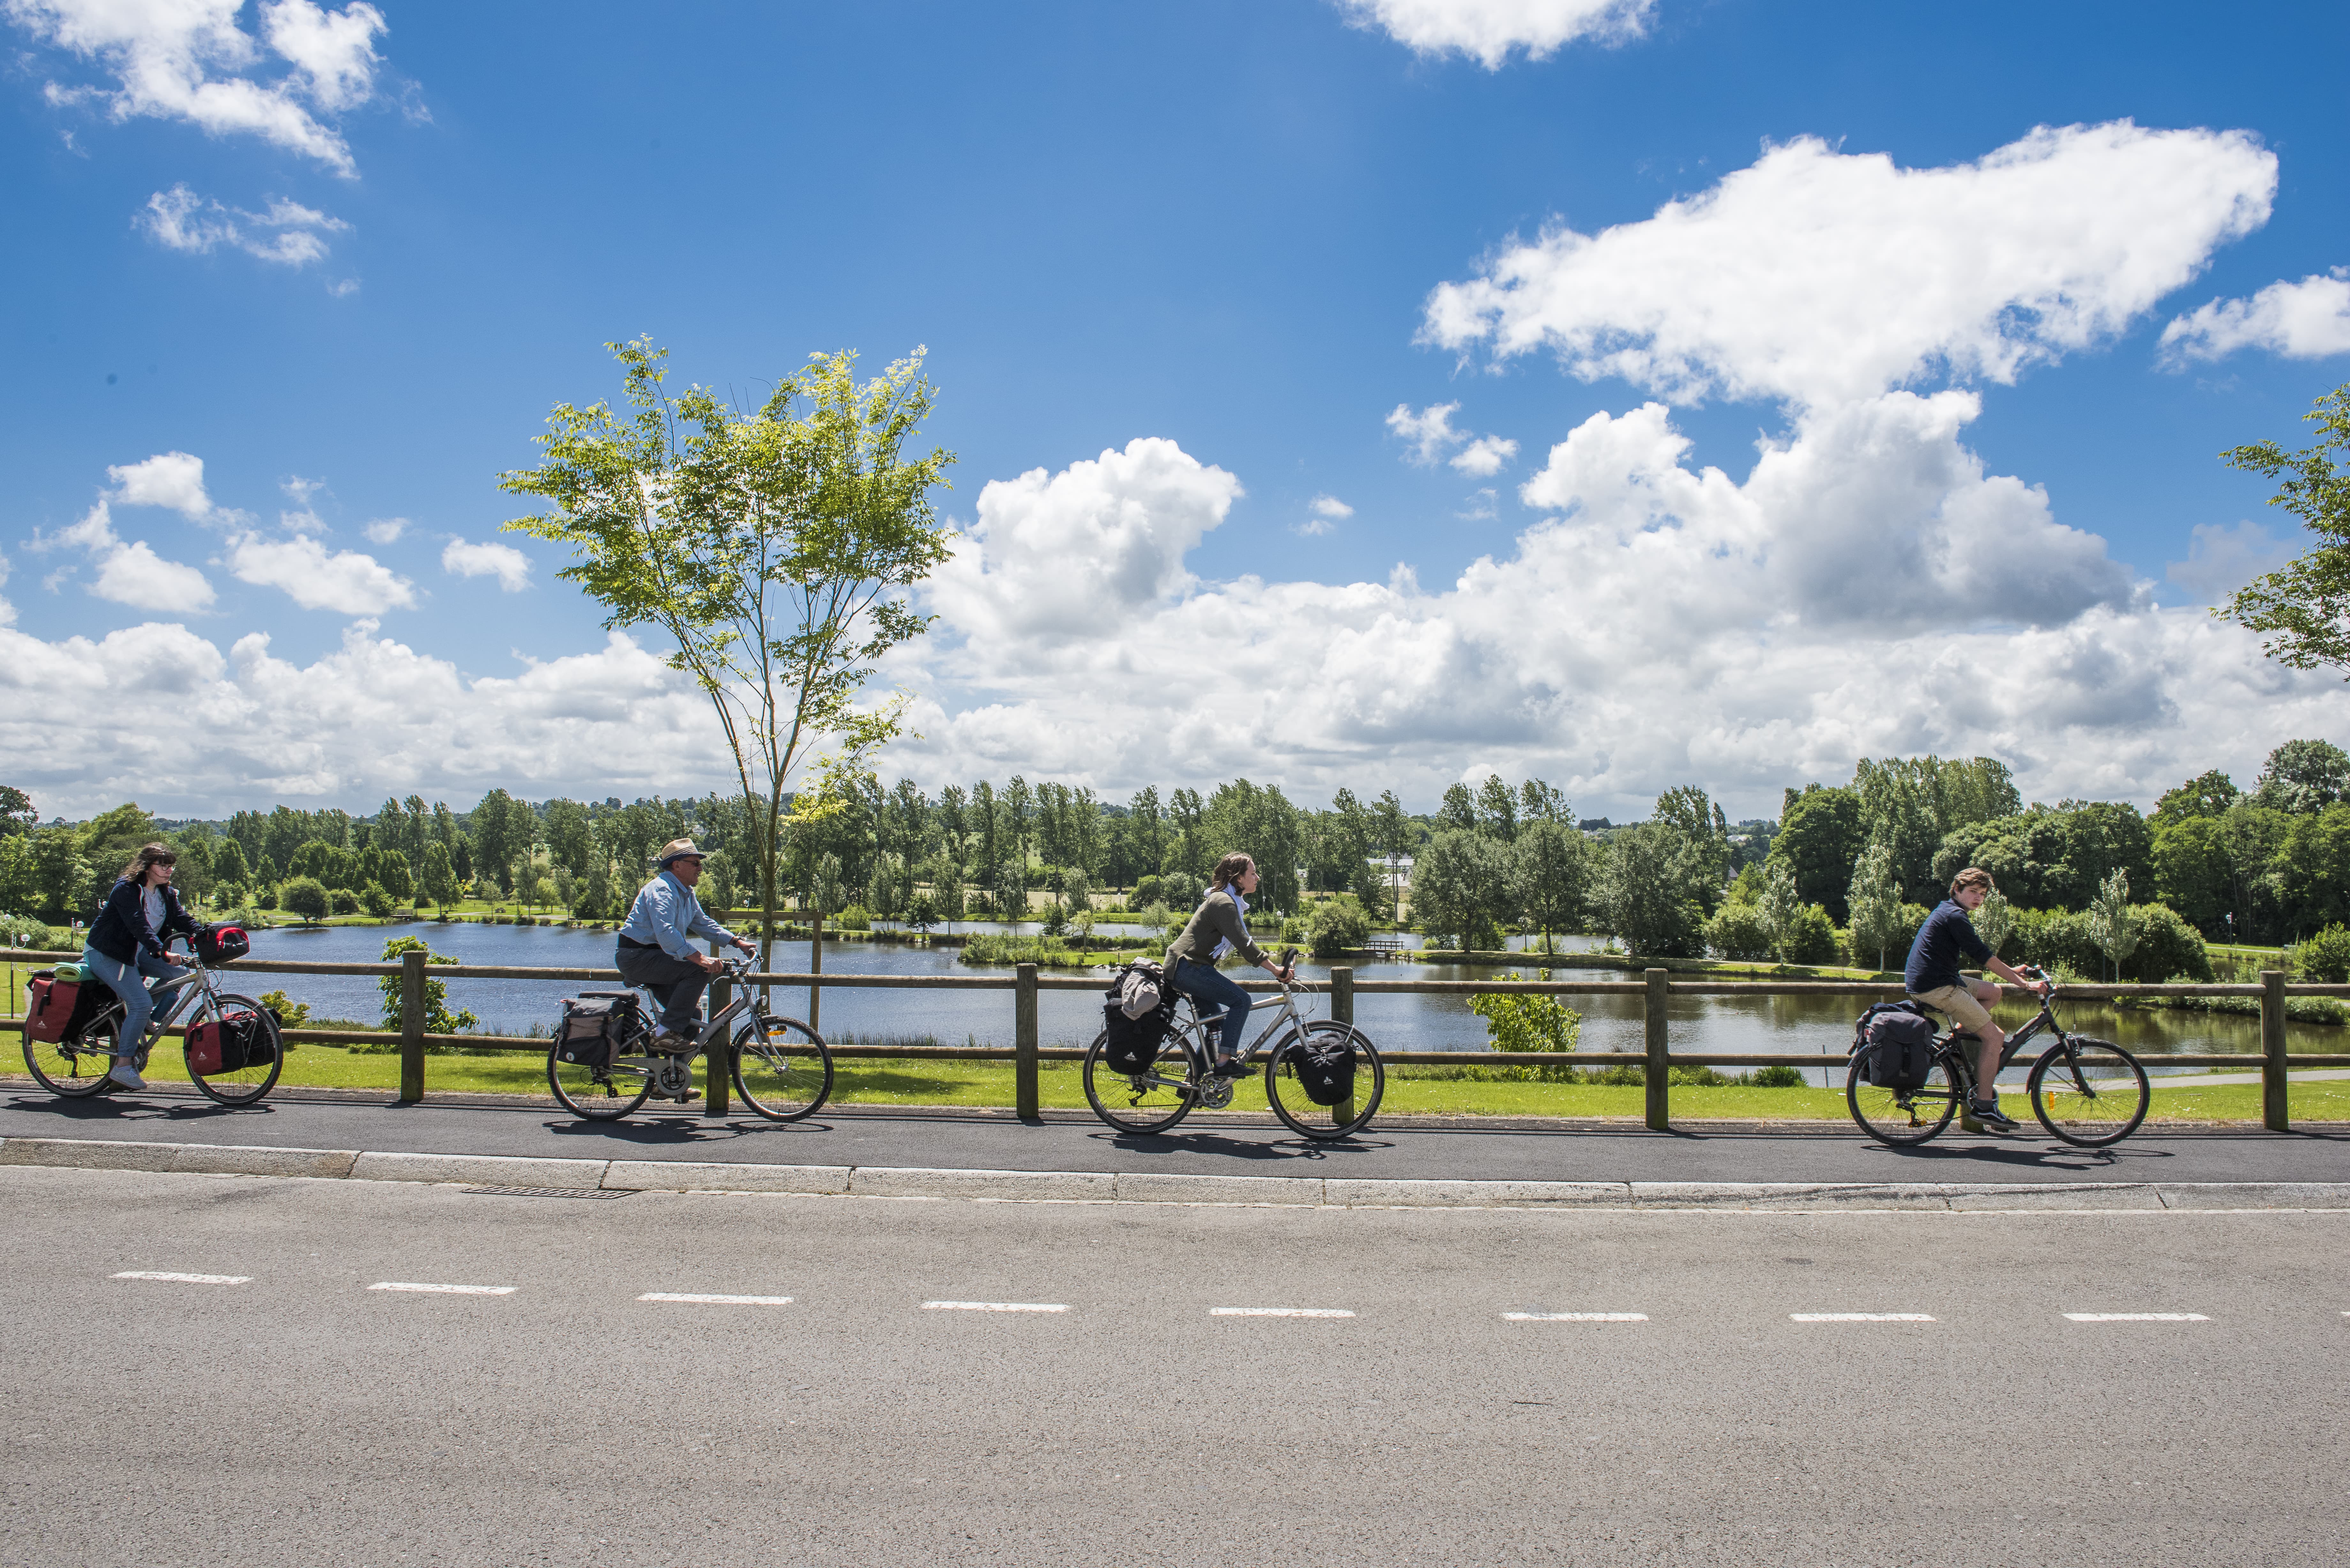 Cyclomundo riders on the Veloscenie, shot by David-Darrault